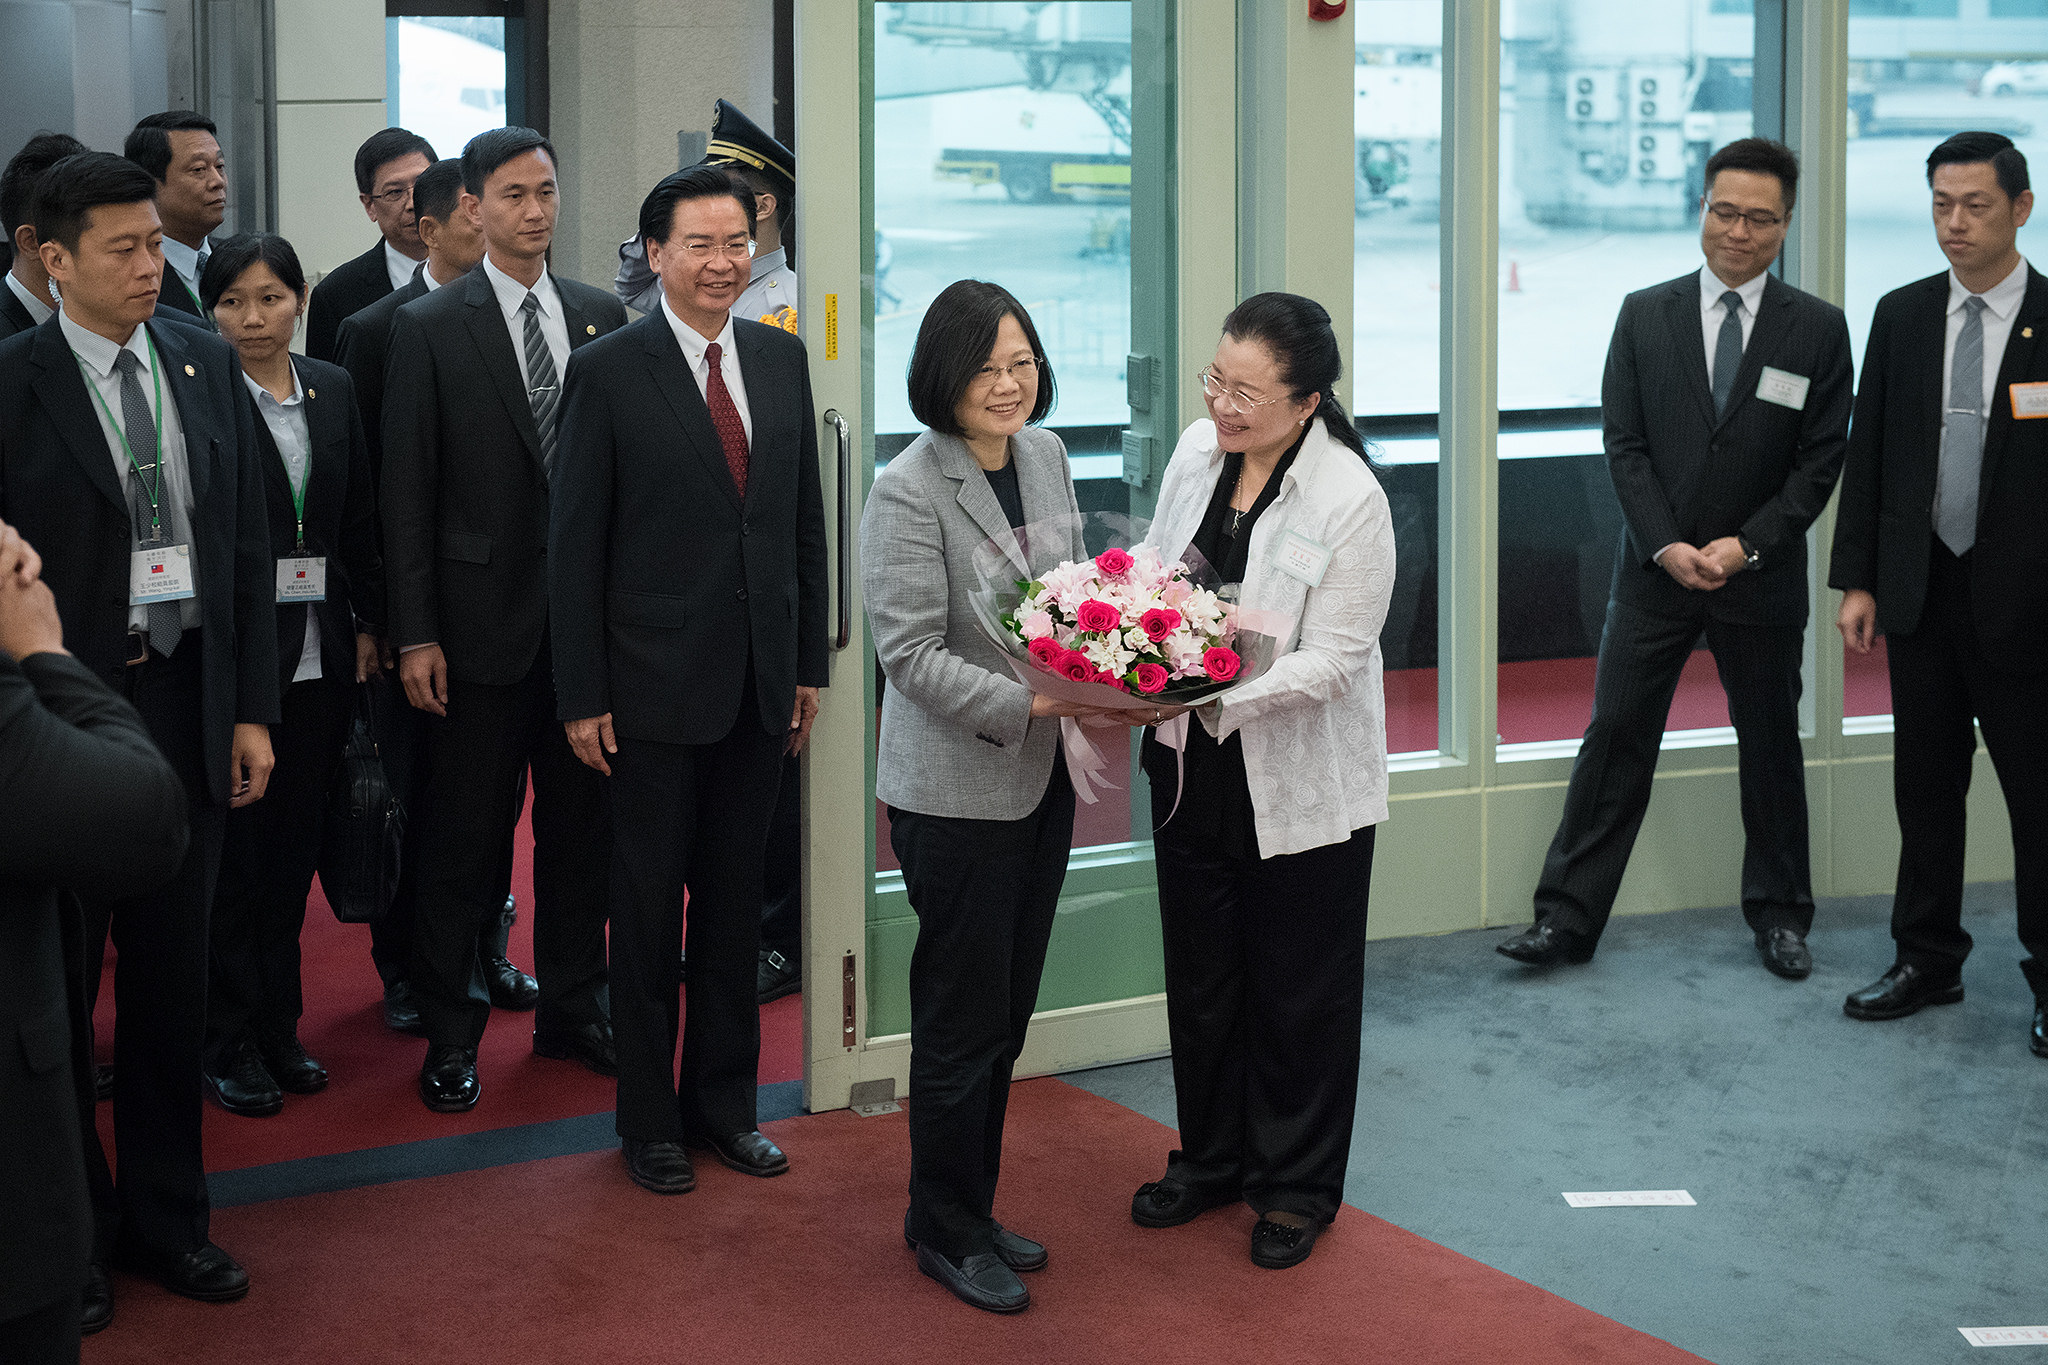 President Tsai's remarks upon returning to Taiwan